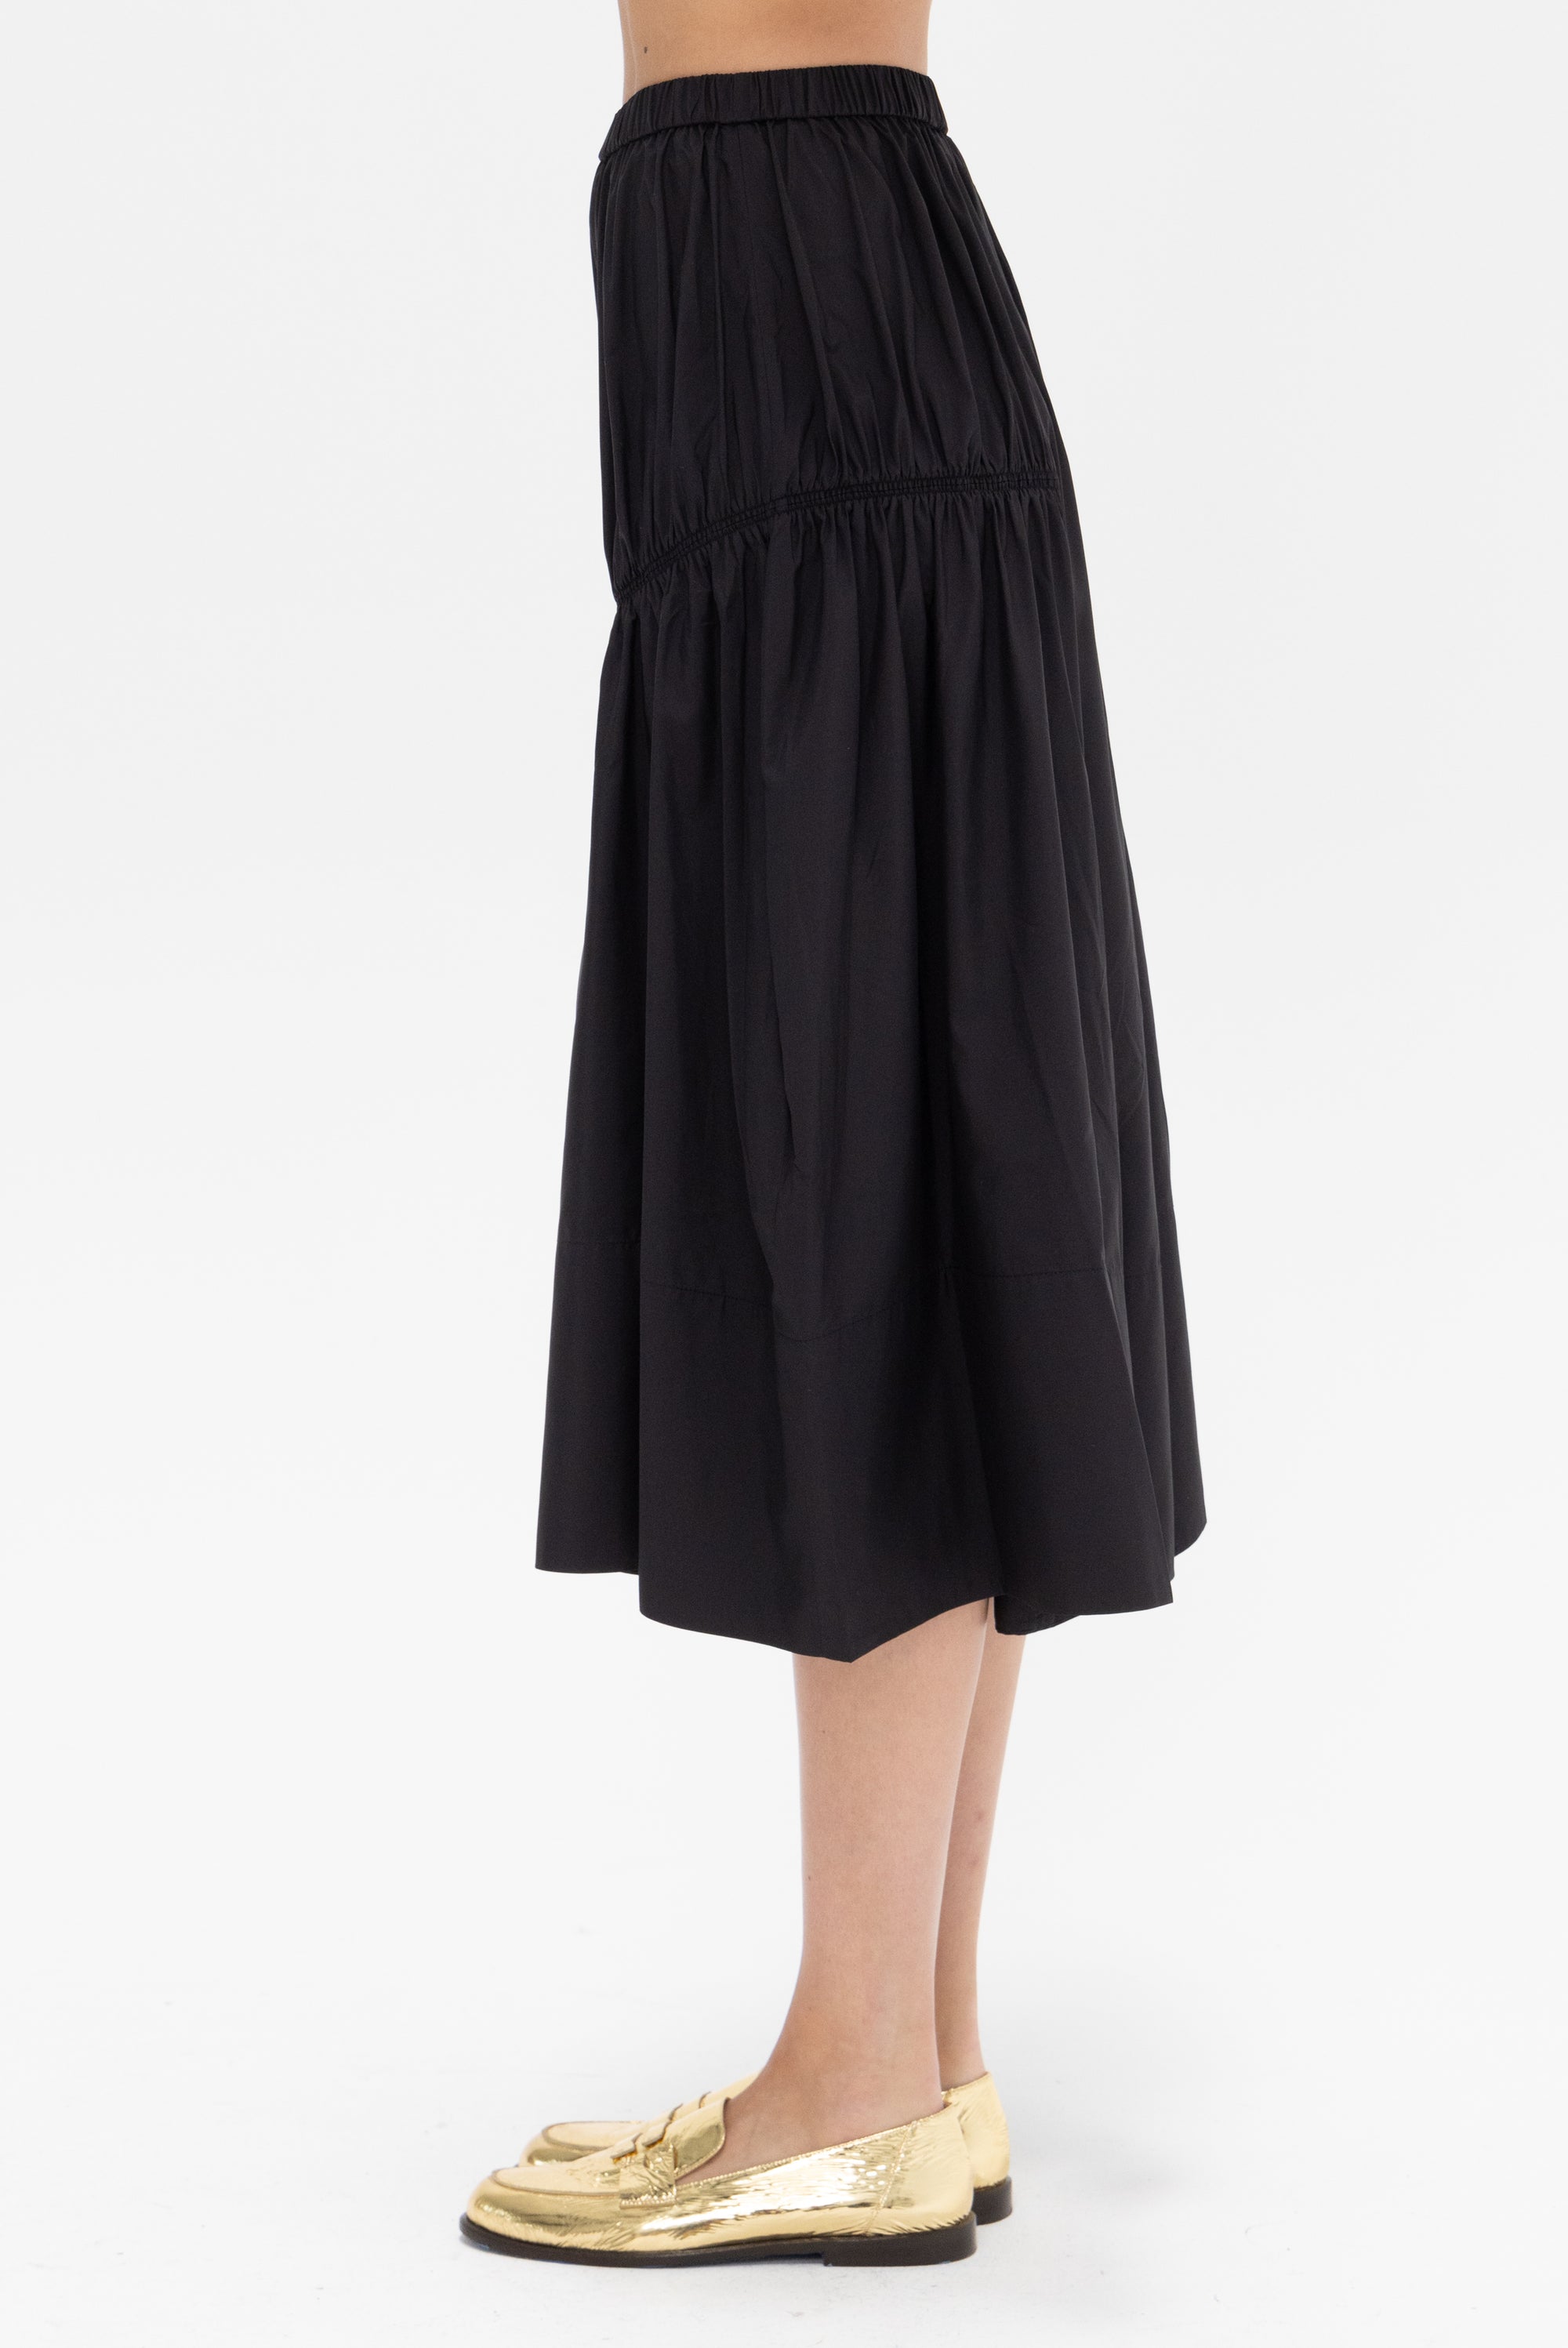 TIBI - Shirred Nylon Paneled Skirt, Black